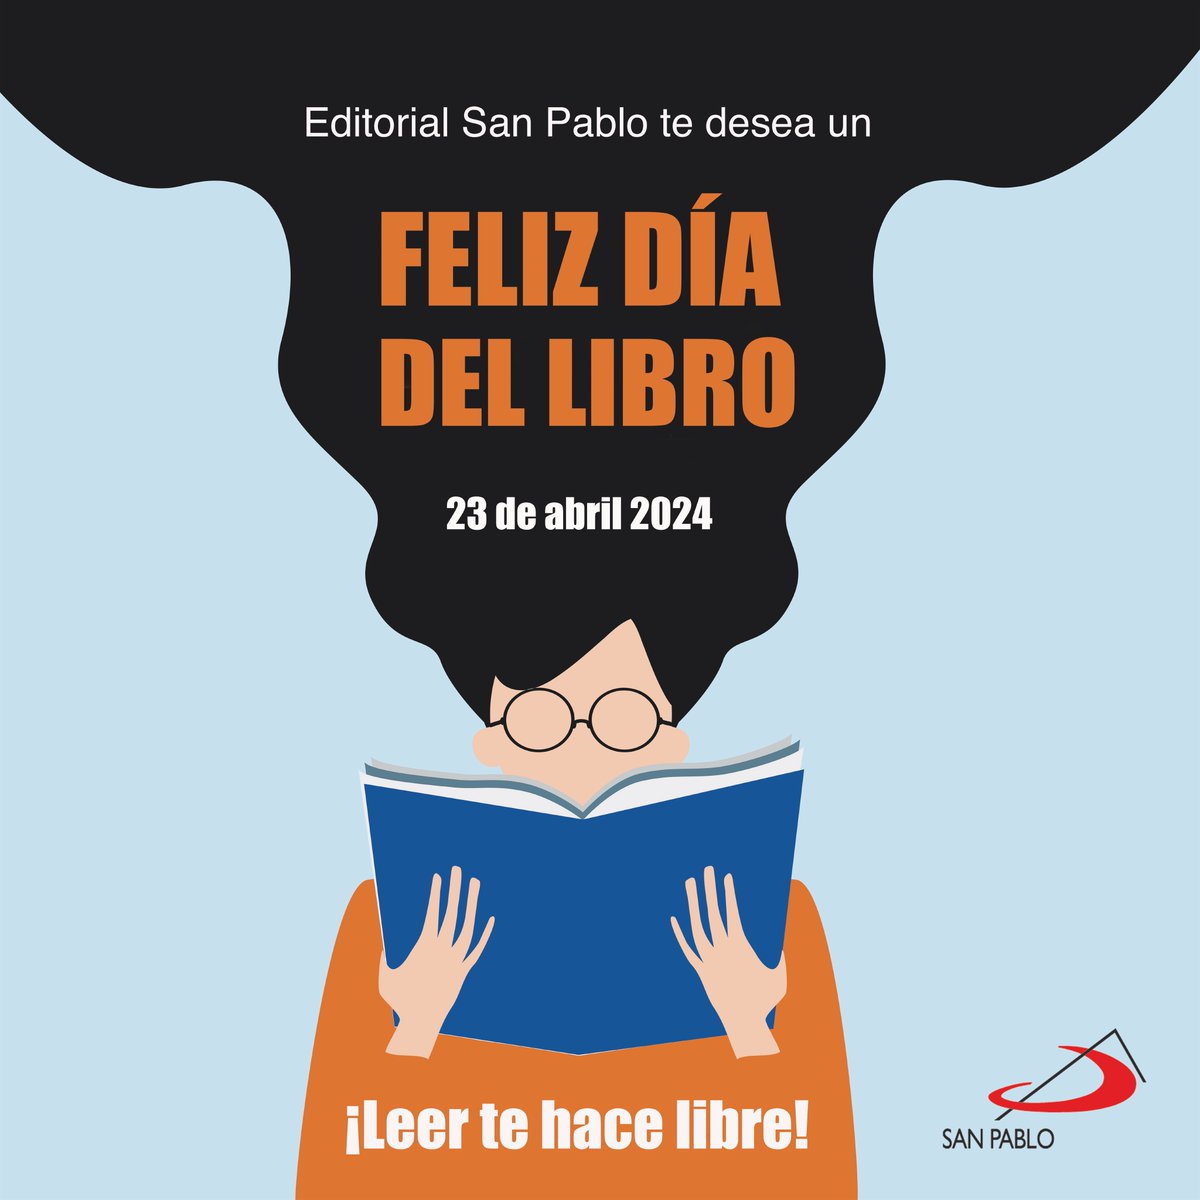 Editorial San Pablo España (@sanpablo_es) on Twitter photo 2024-04-23 15:06:19